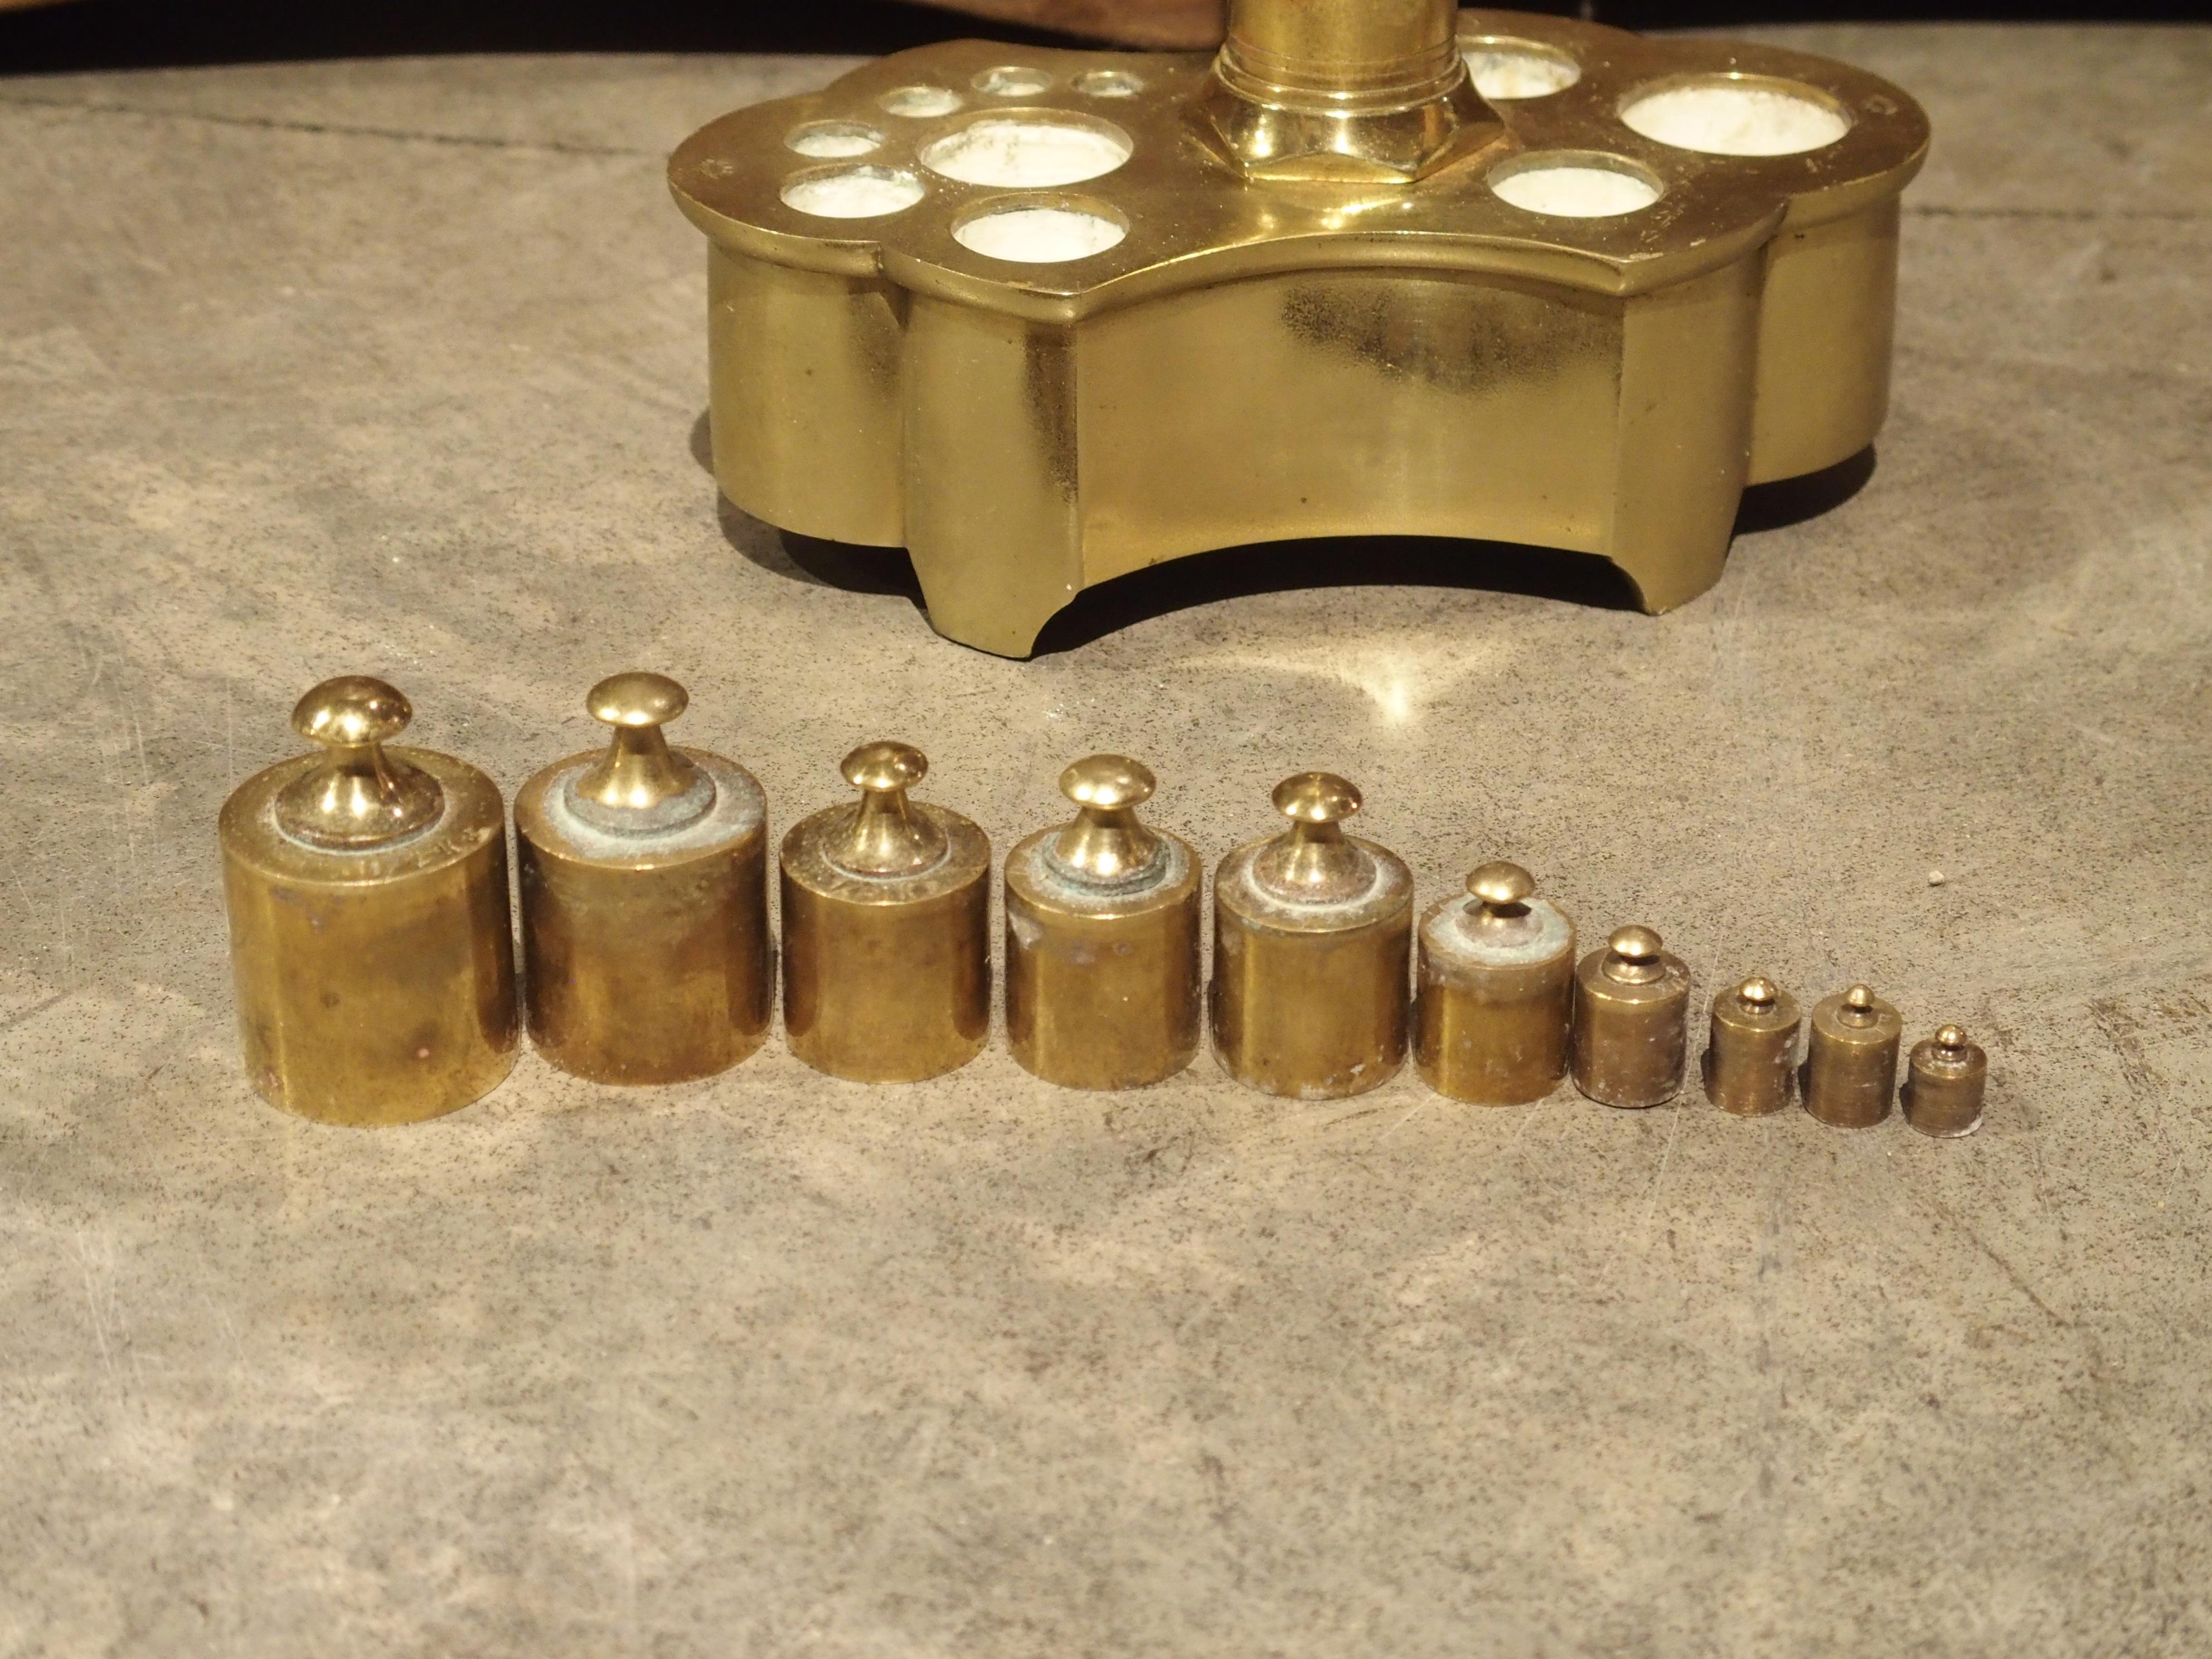 antique brass scale